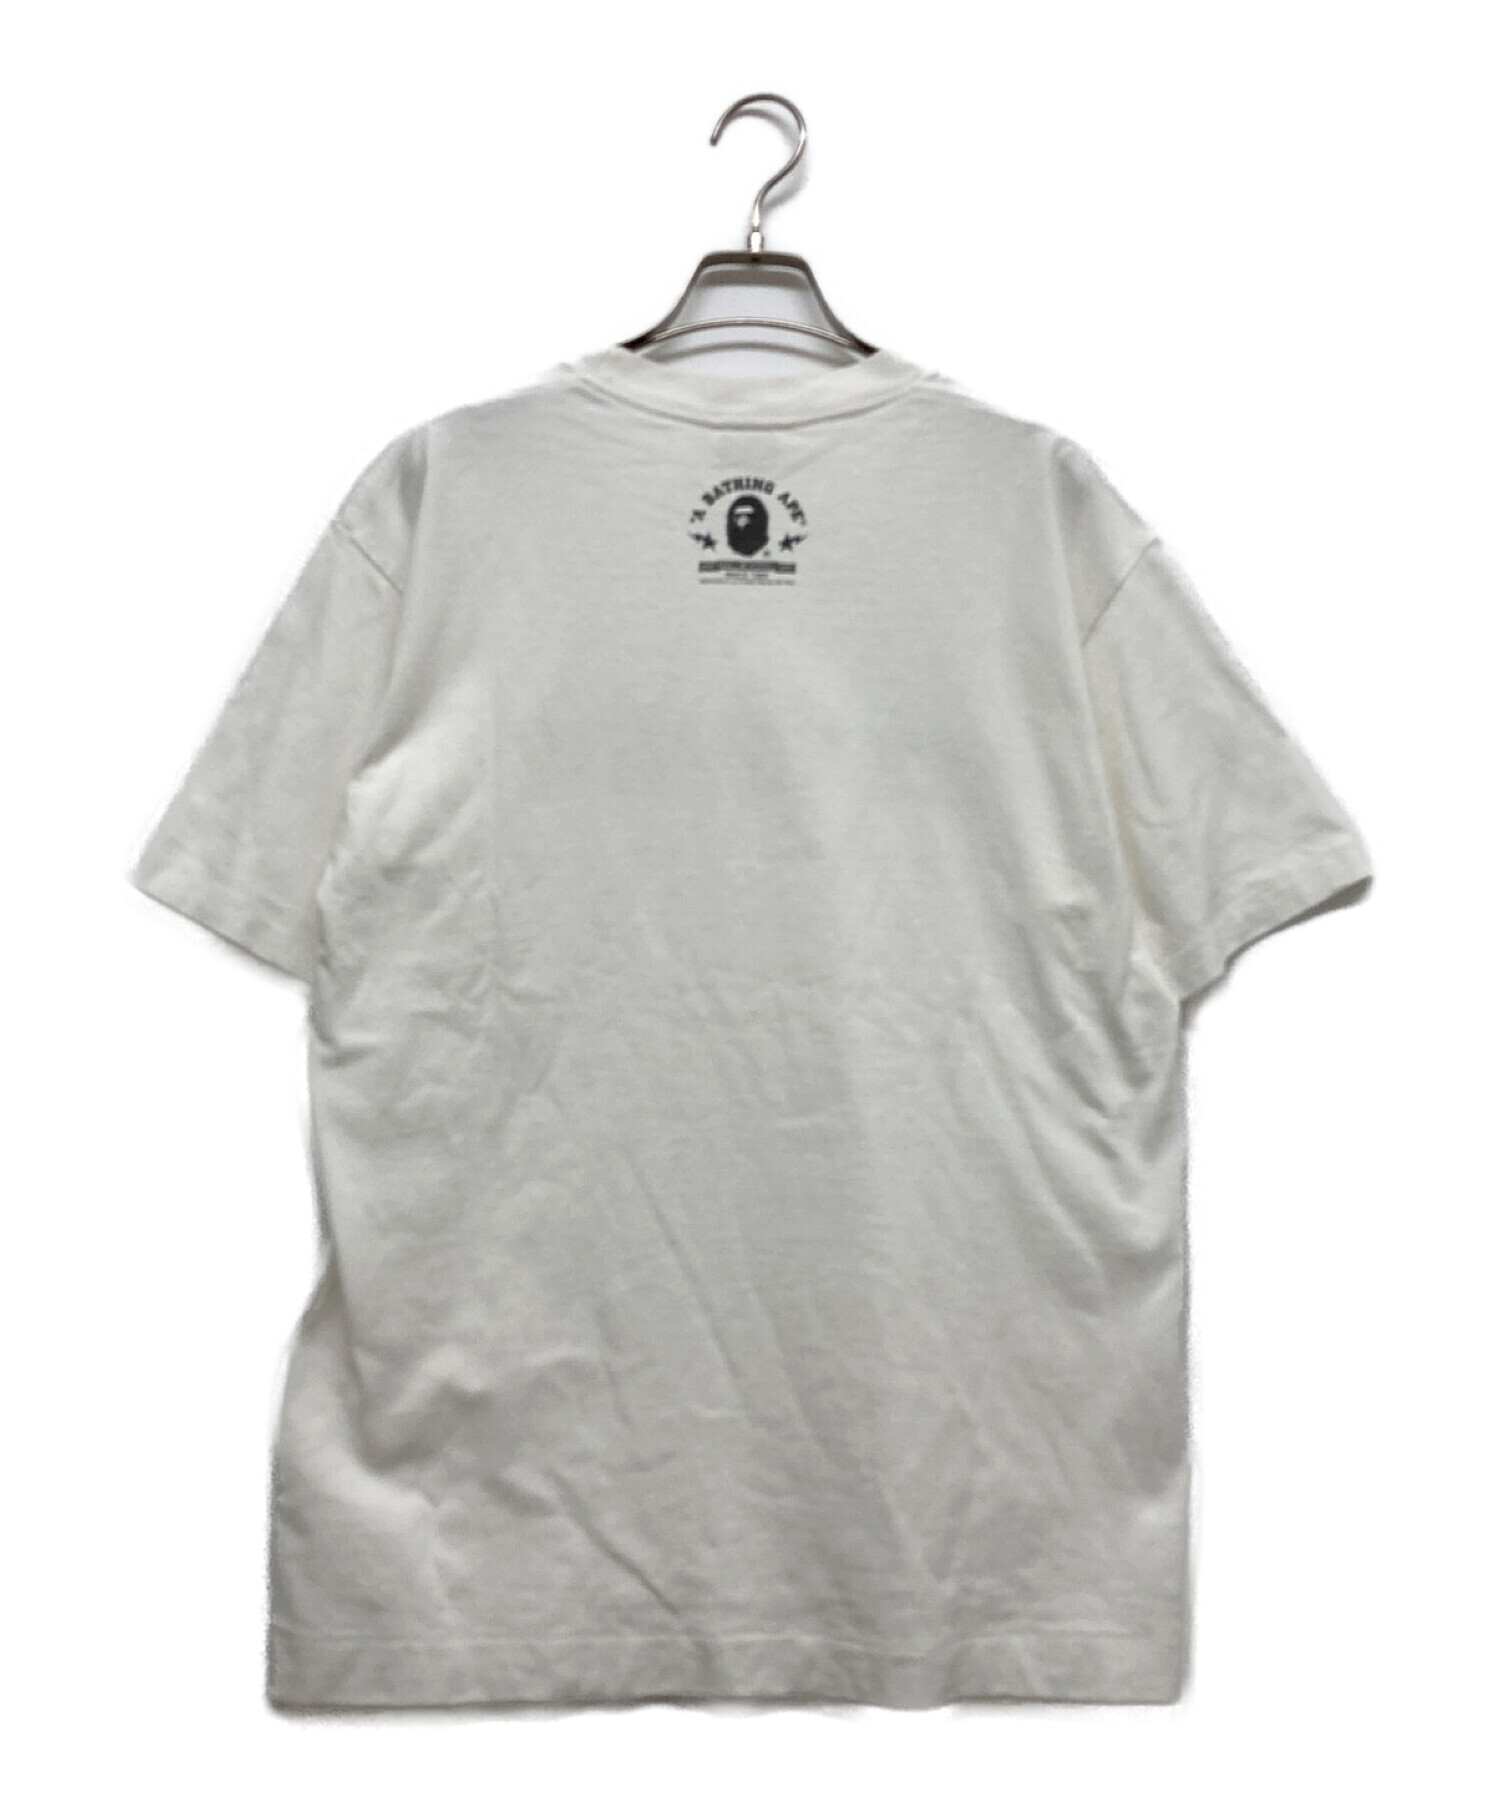 BAPE BY A BATHING APE (ベイプバイアベイシングエイプ) 半袖Tシャツ ホワイト サイズ:M